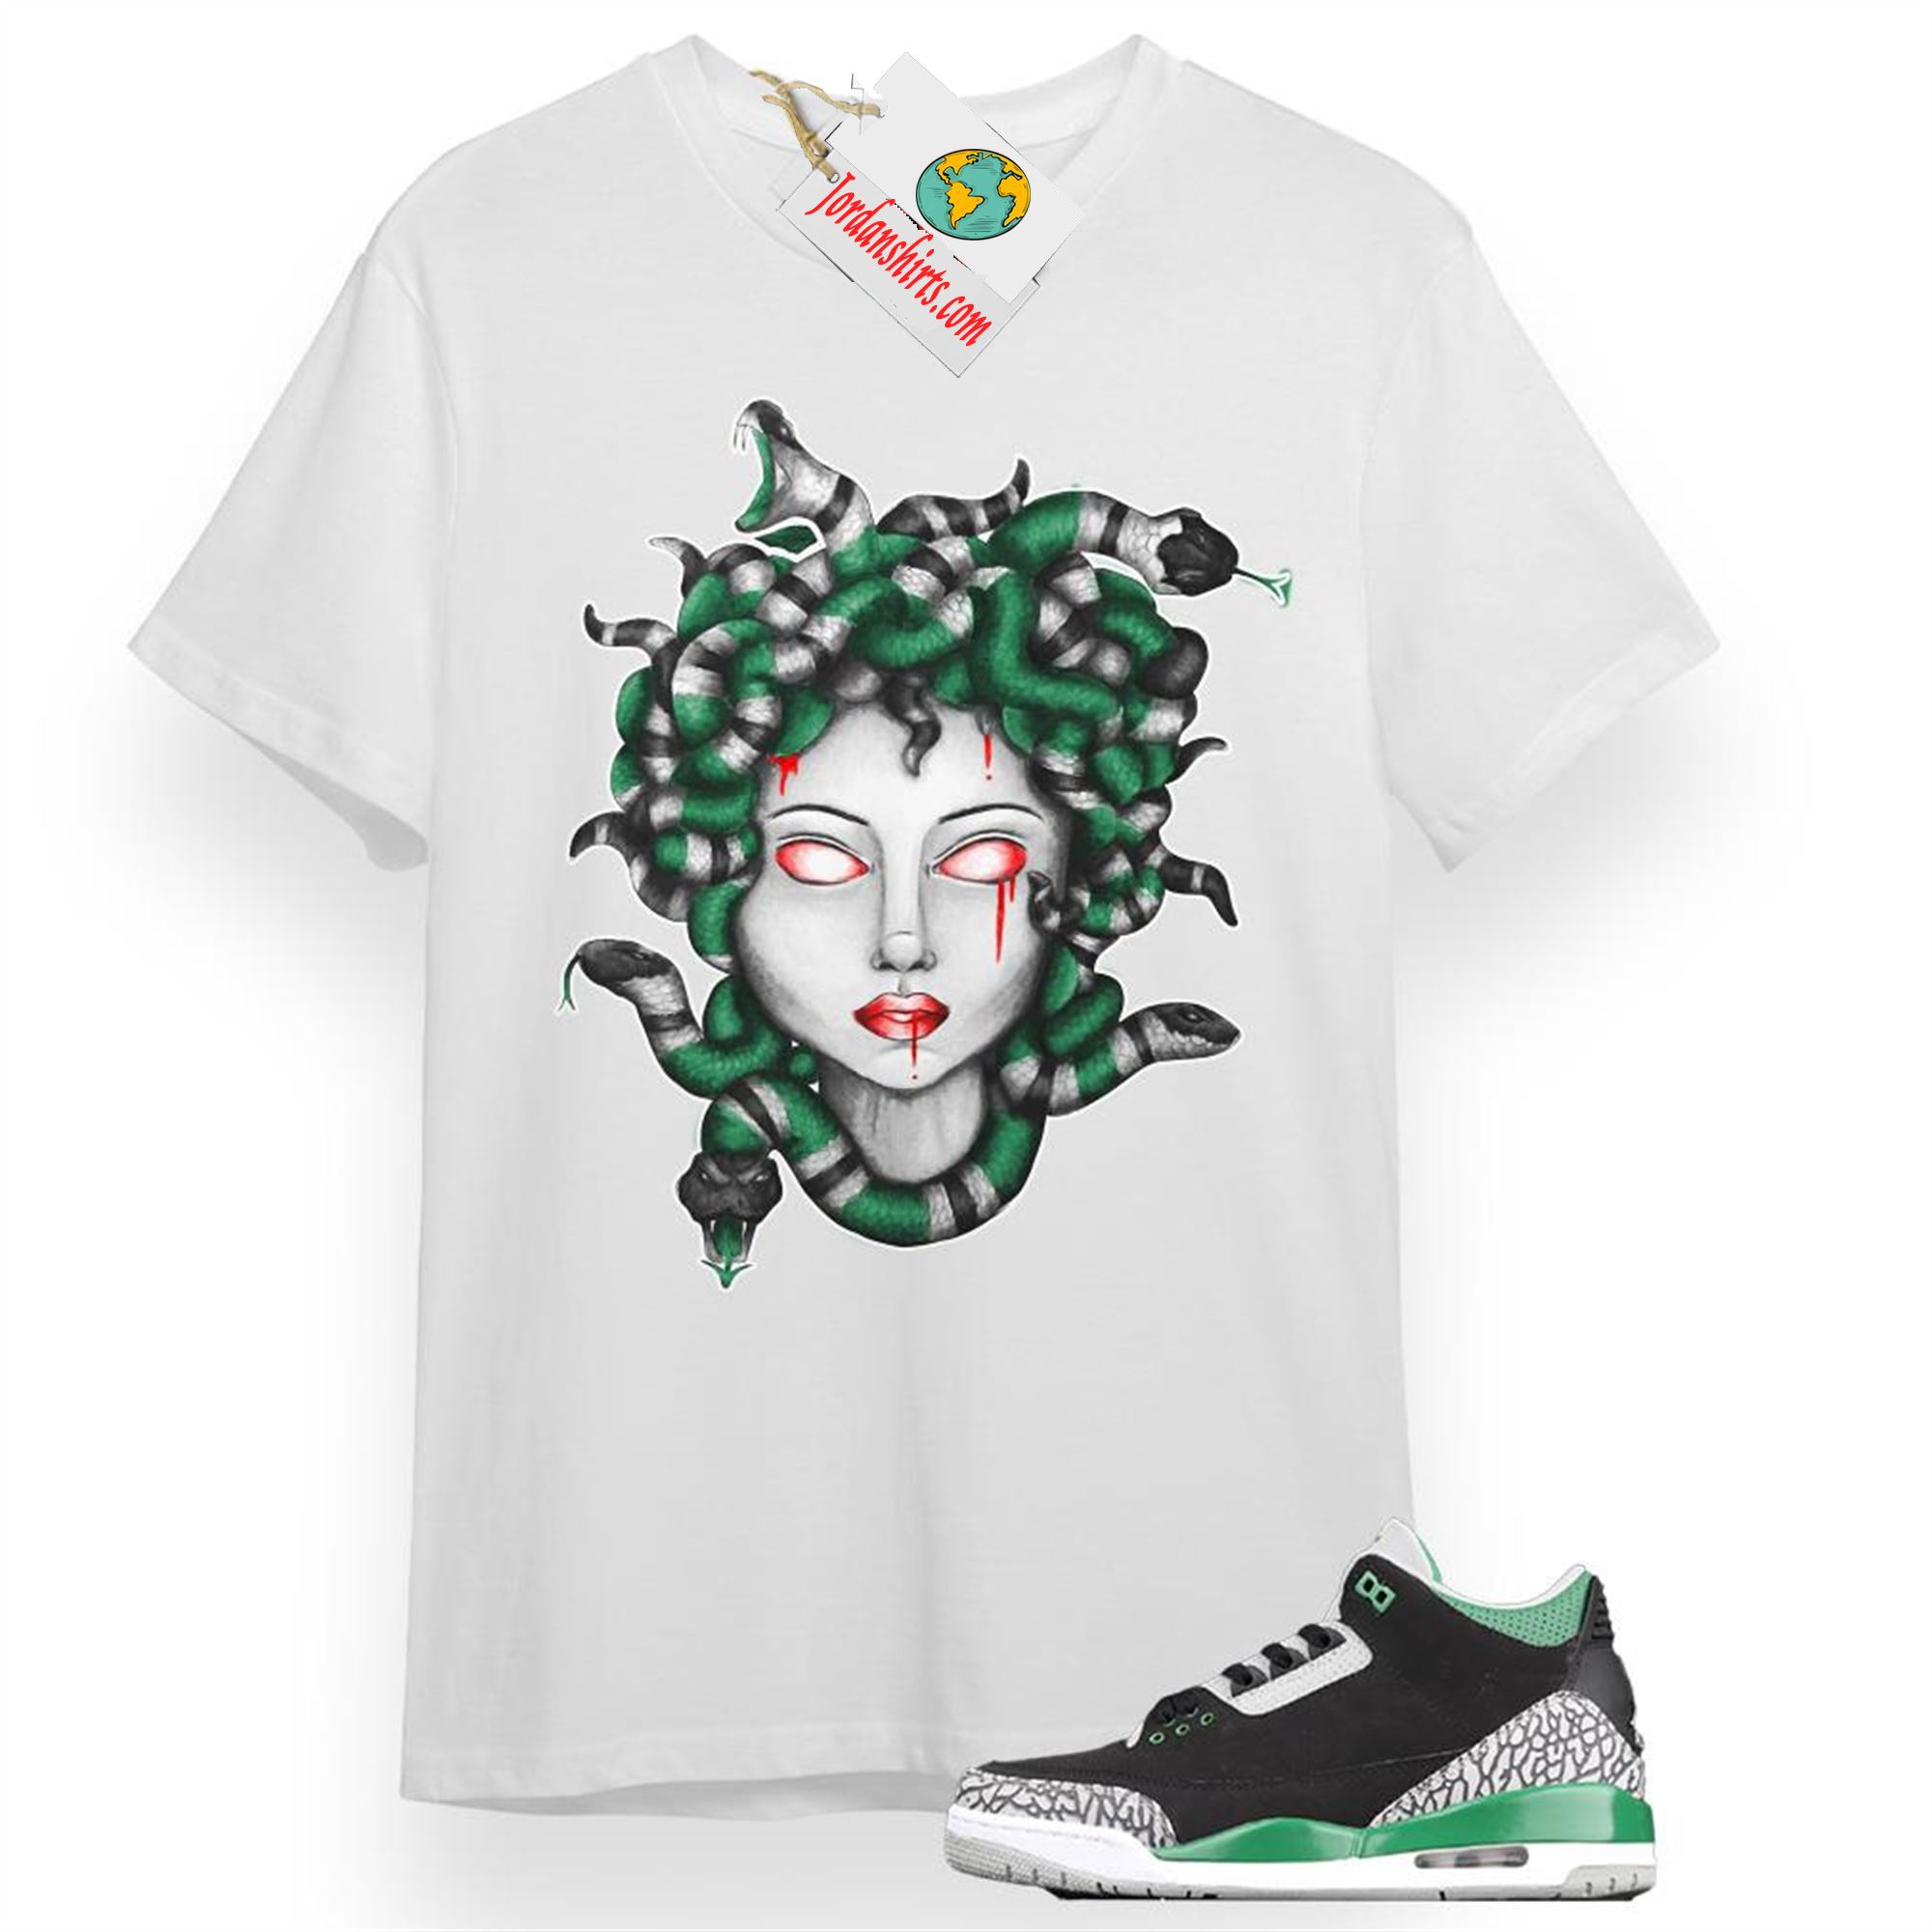 Jordan 3 Shirt, Medusa Snake White T-shirt Air Jordan 3 Pine Green 3s Full Size Up To 5xl